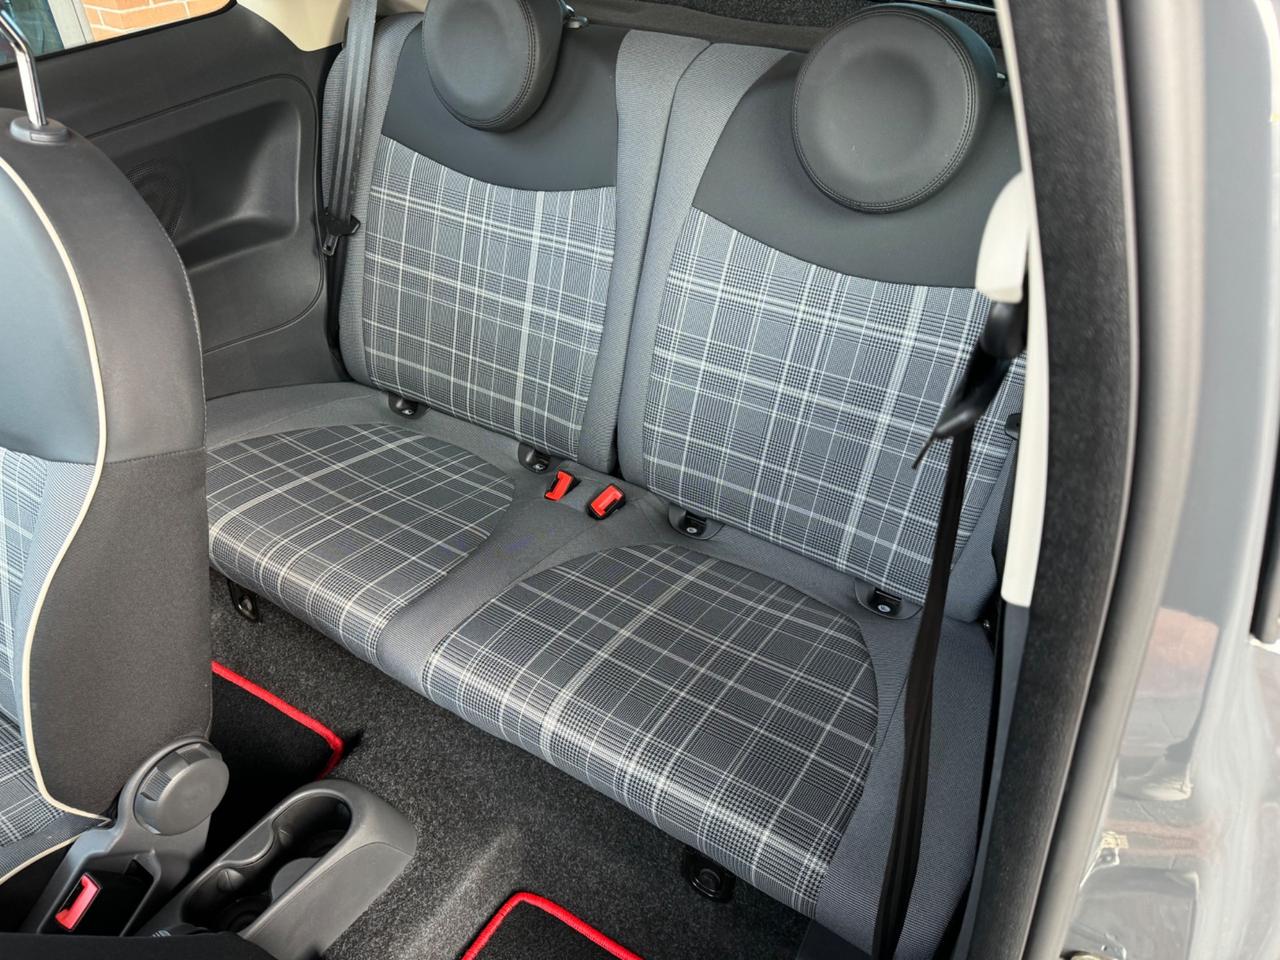 Fiat 500 1.2 Lounge Neopatentati